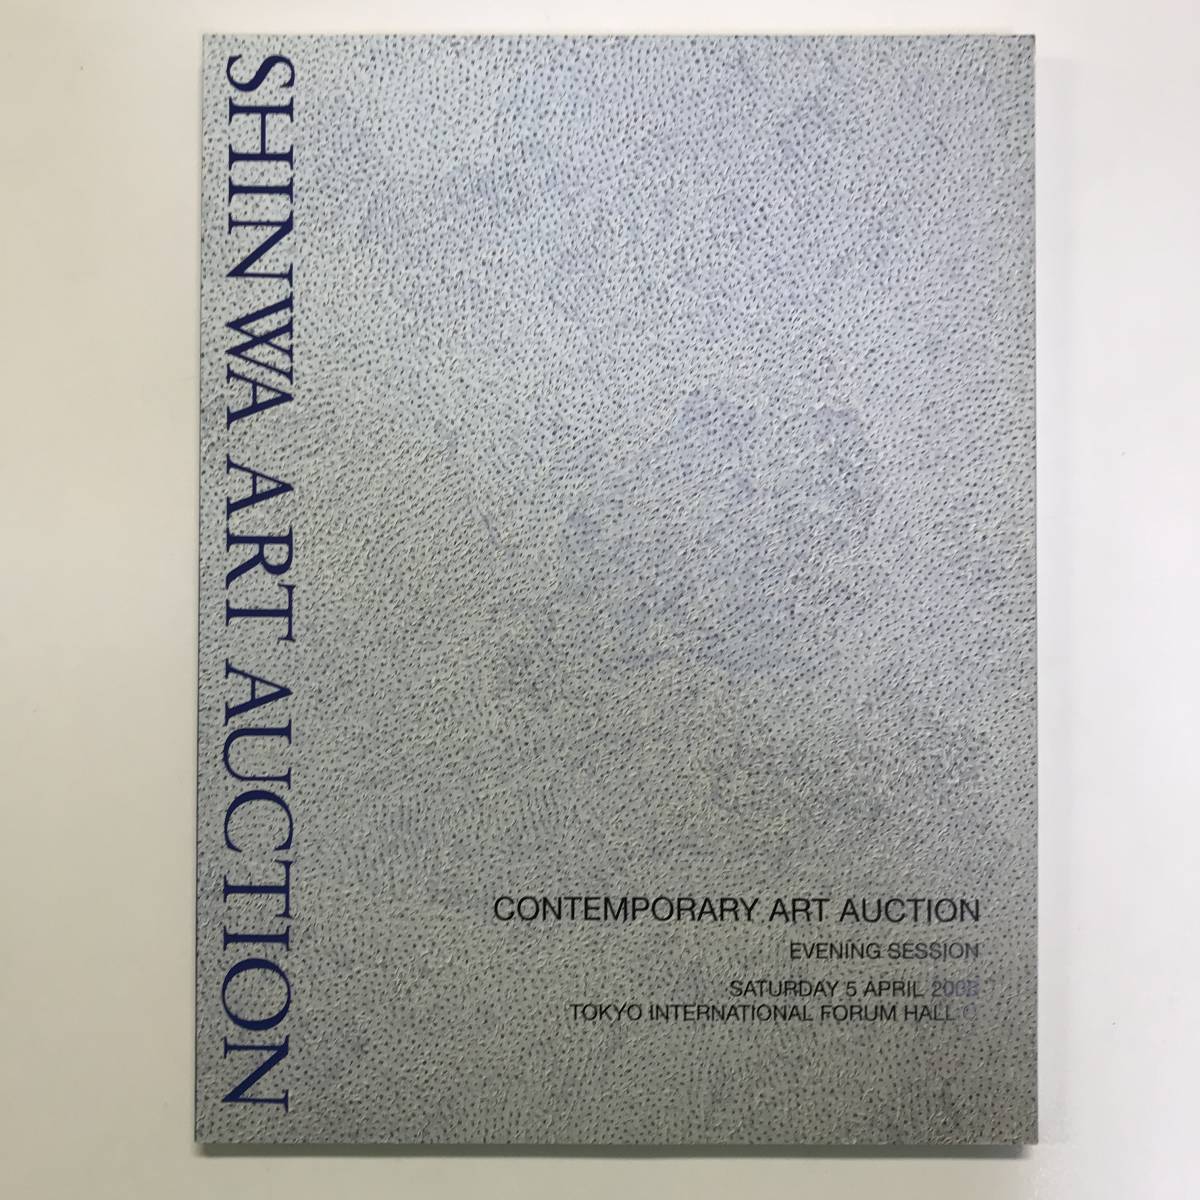  auction catalog SHINWA ART AUCTION EVENING SESSION Apr 5 2008 t00138_o5